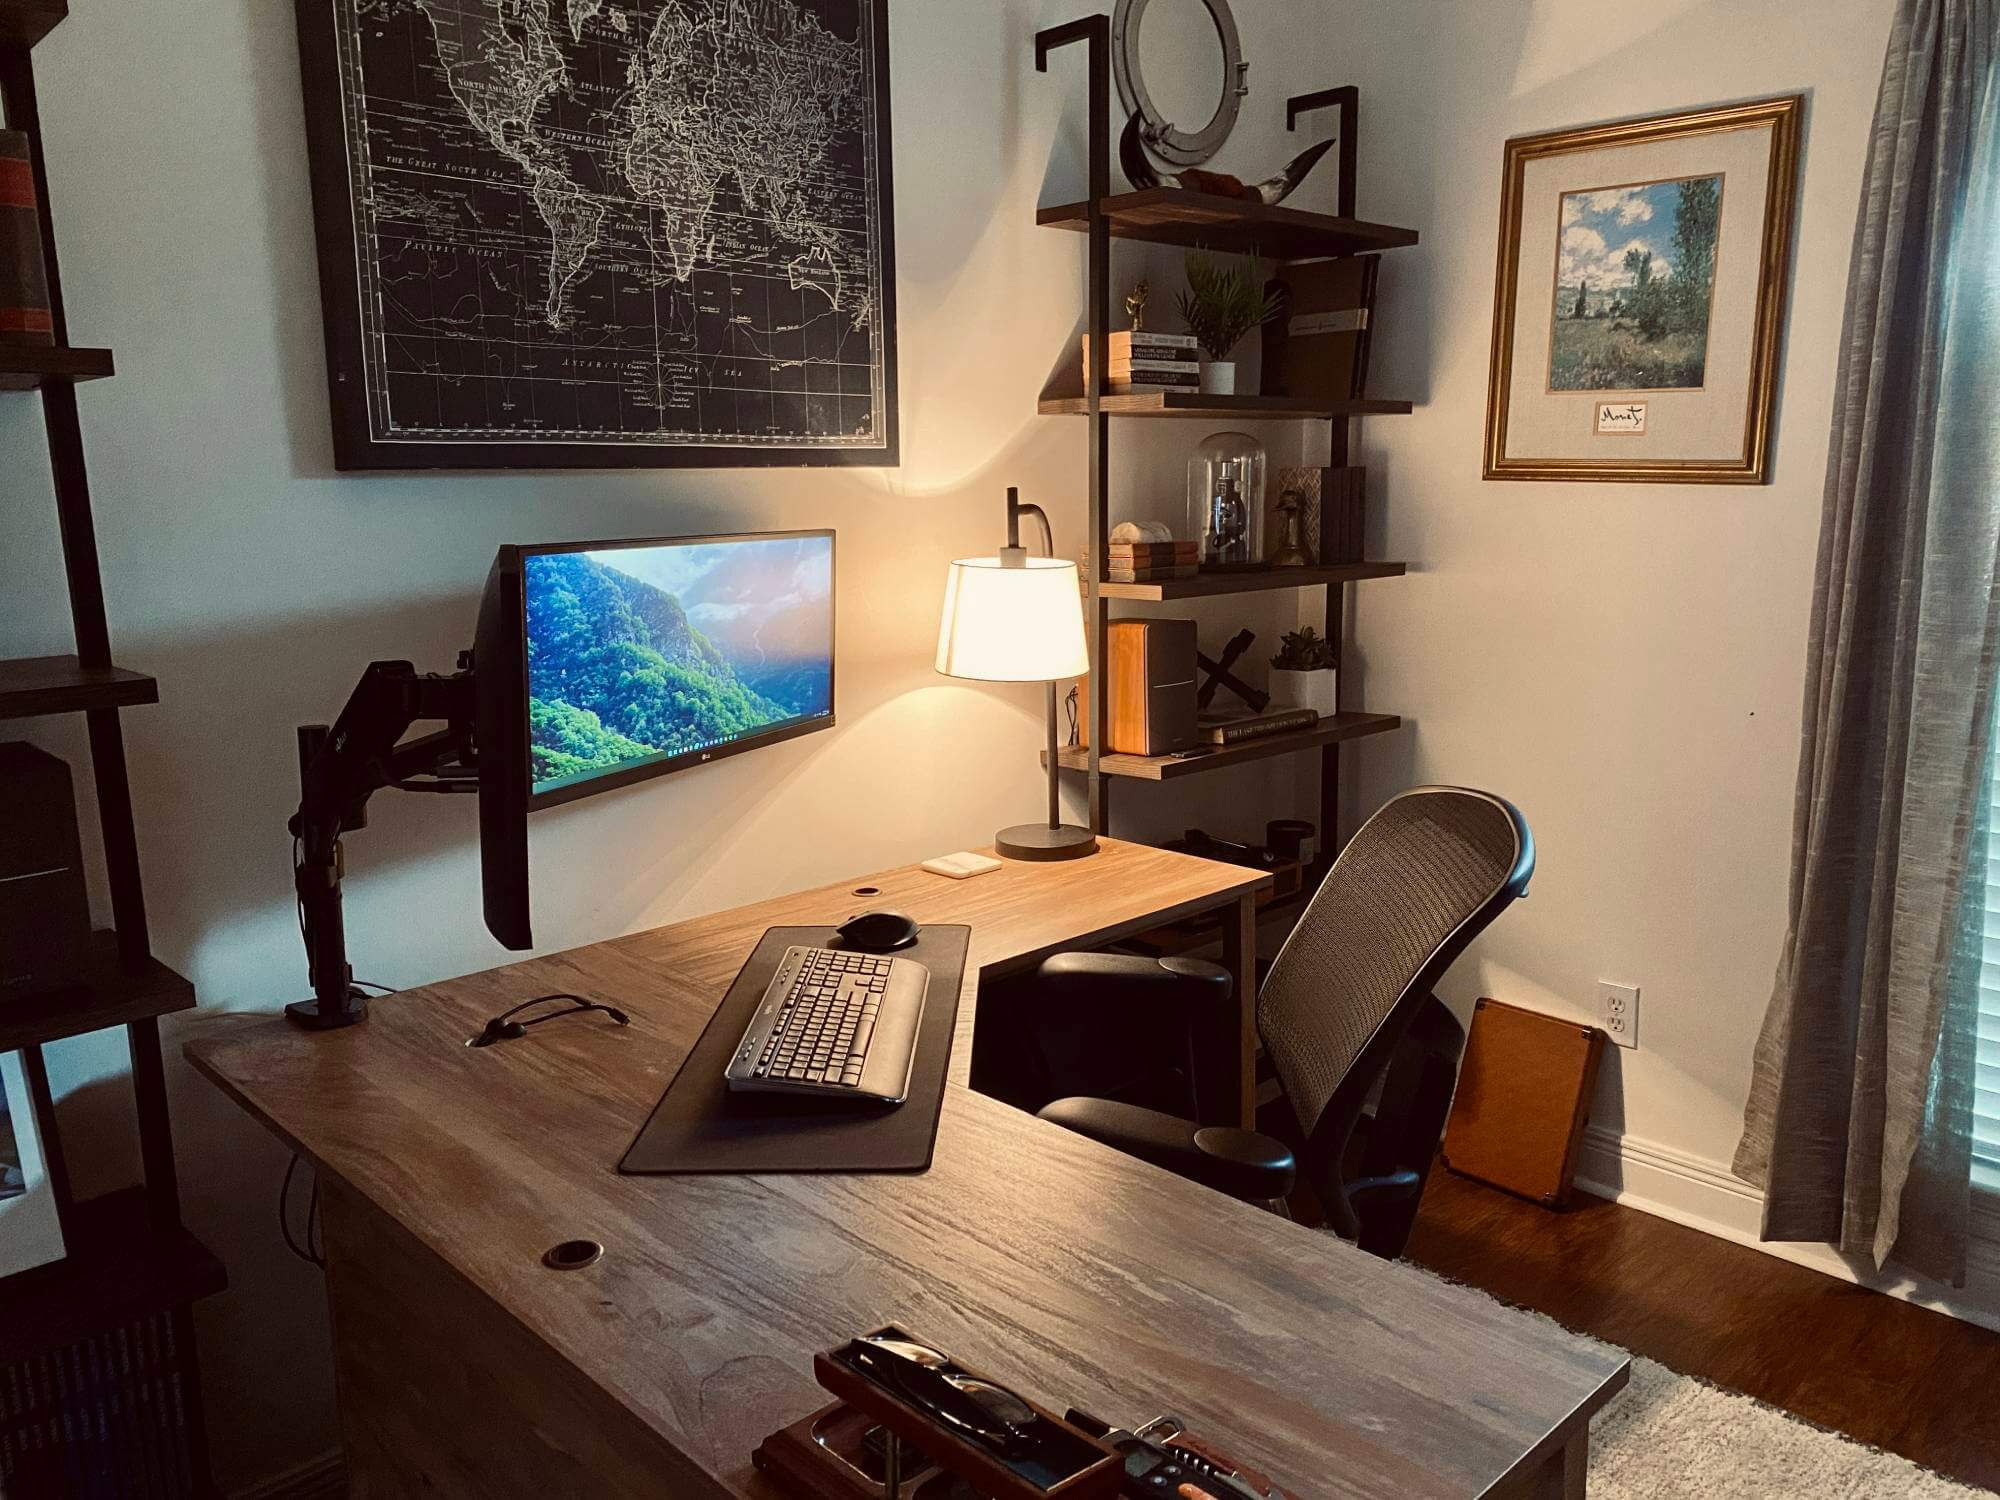 Best Computer Desks (2023): Home Office, Dorm Room Desks for Computers